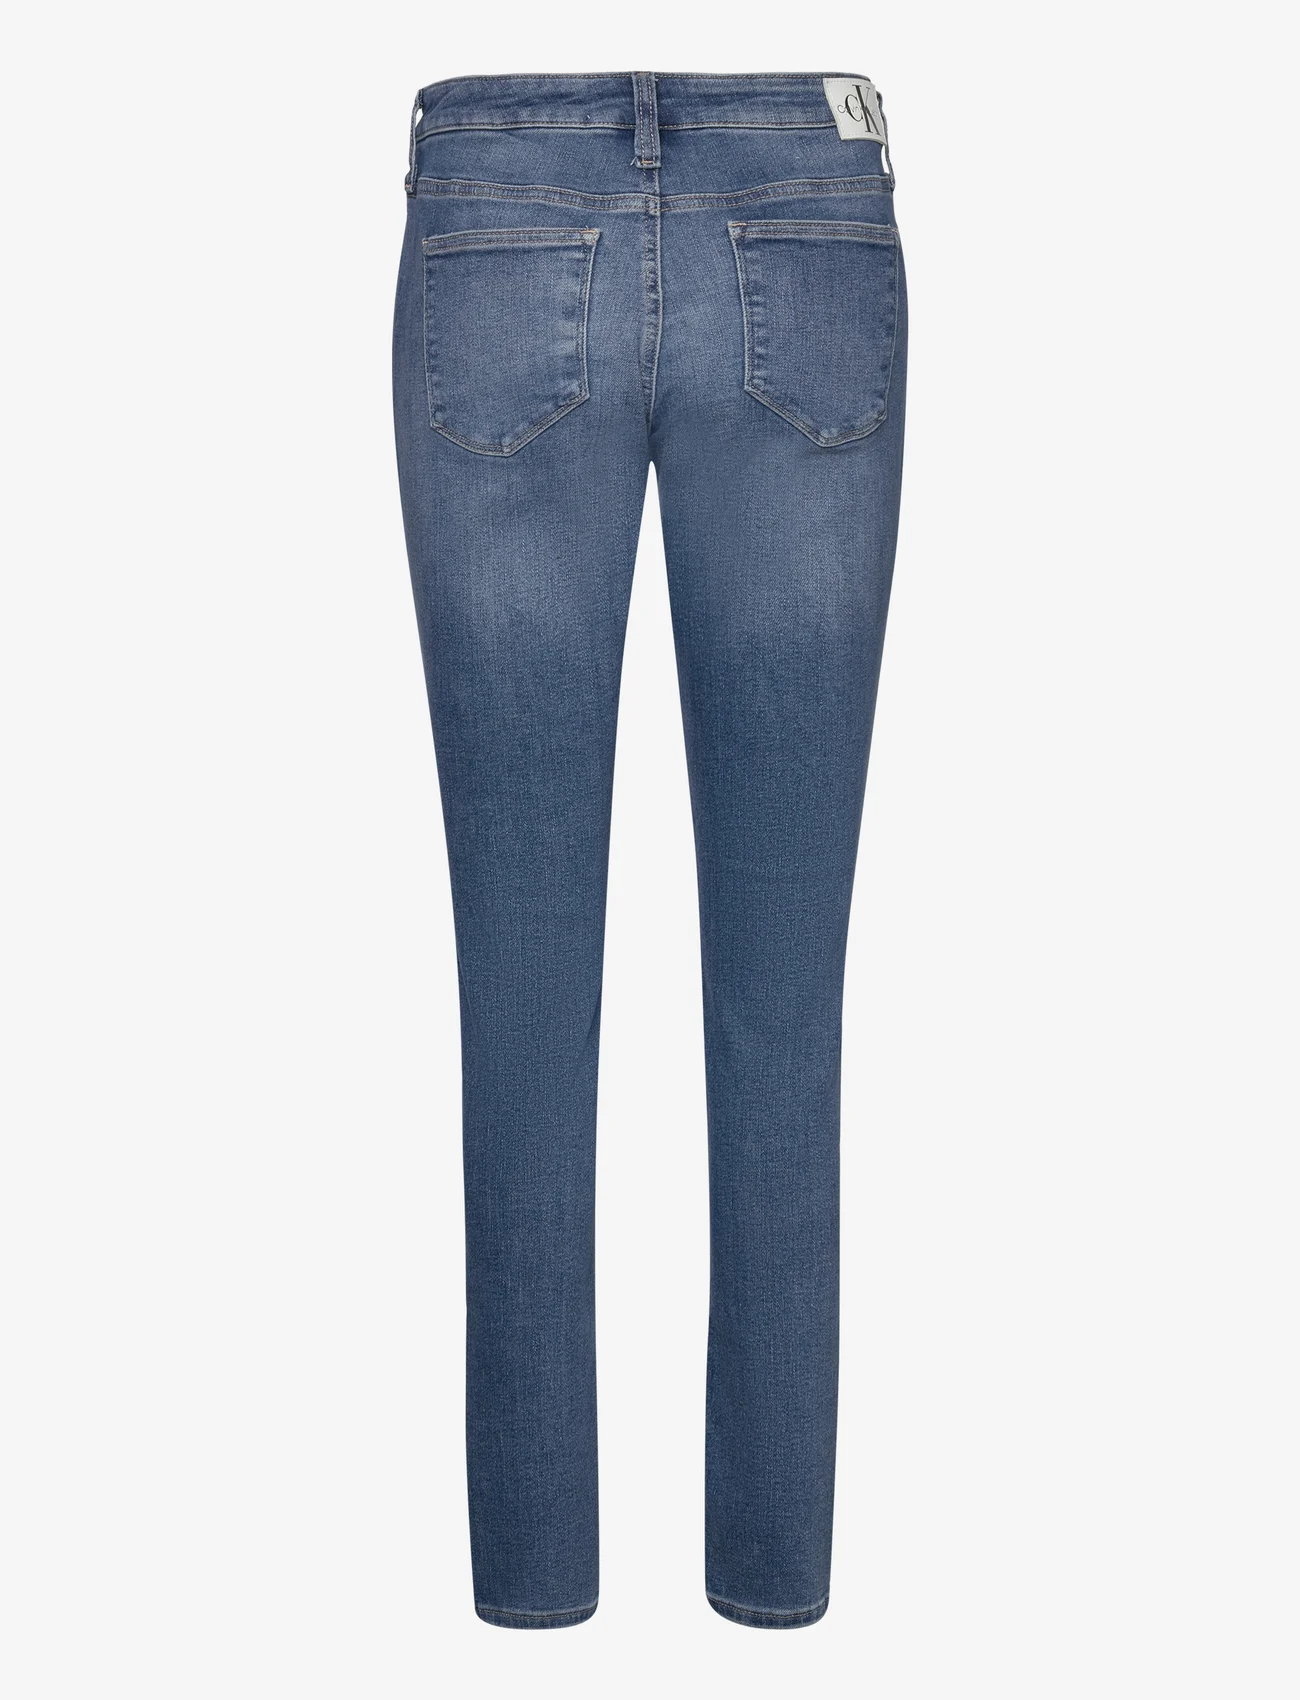 Calvin Klein Jeans - MID RISE SKINNY - dżinsy skinny fit - denim medium - 1